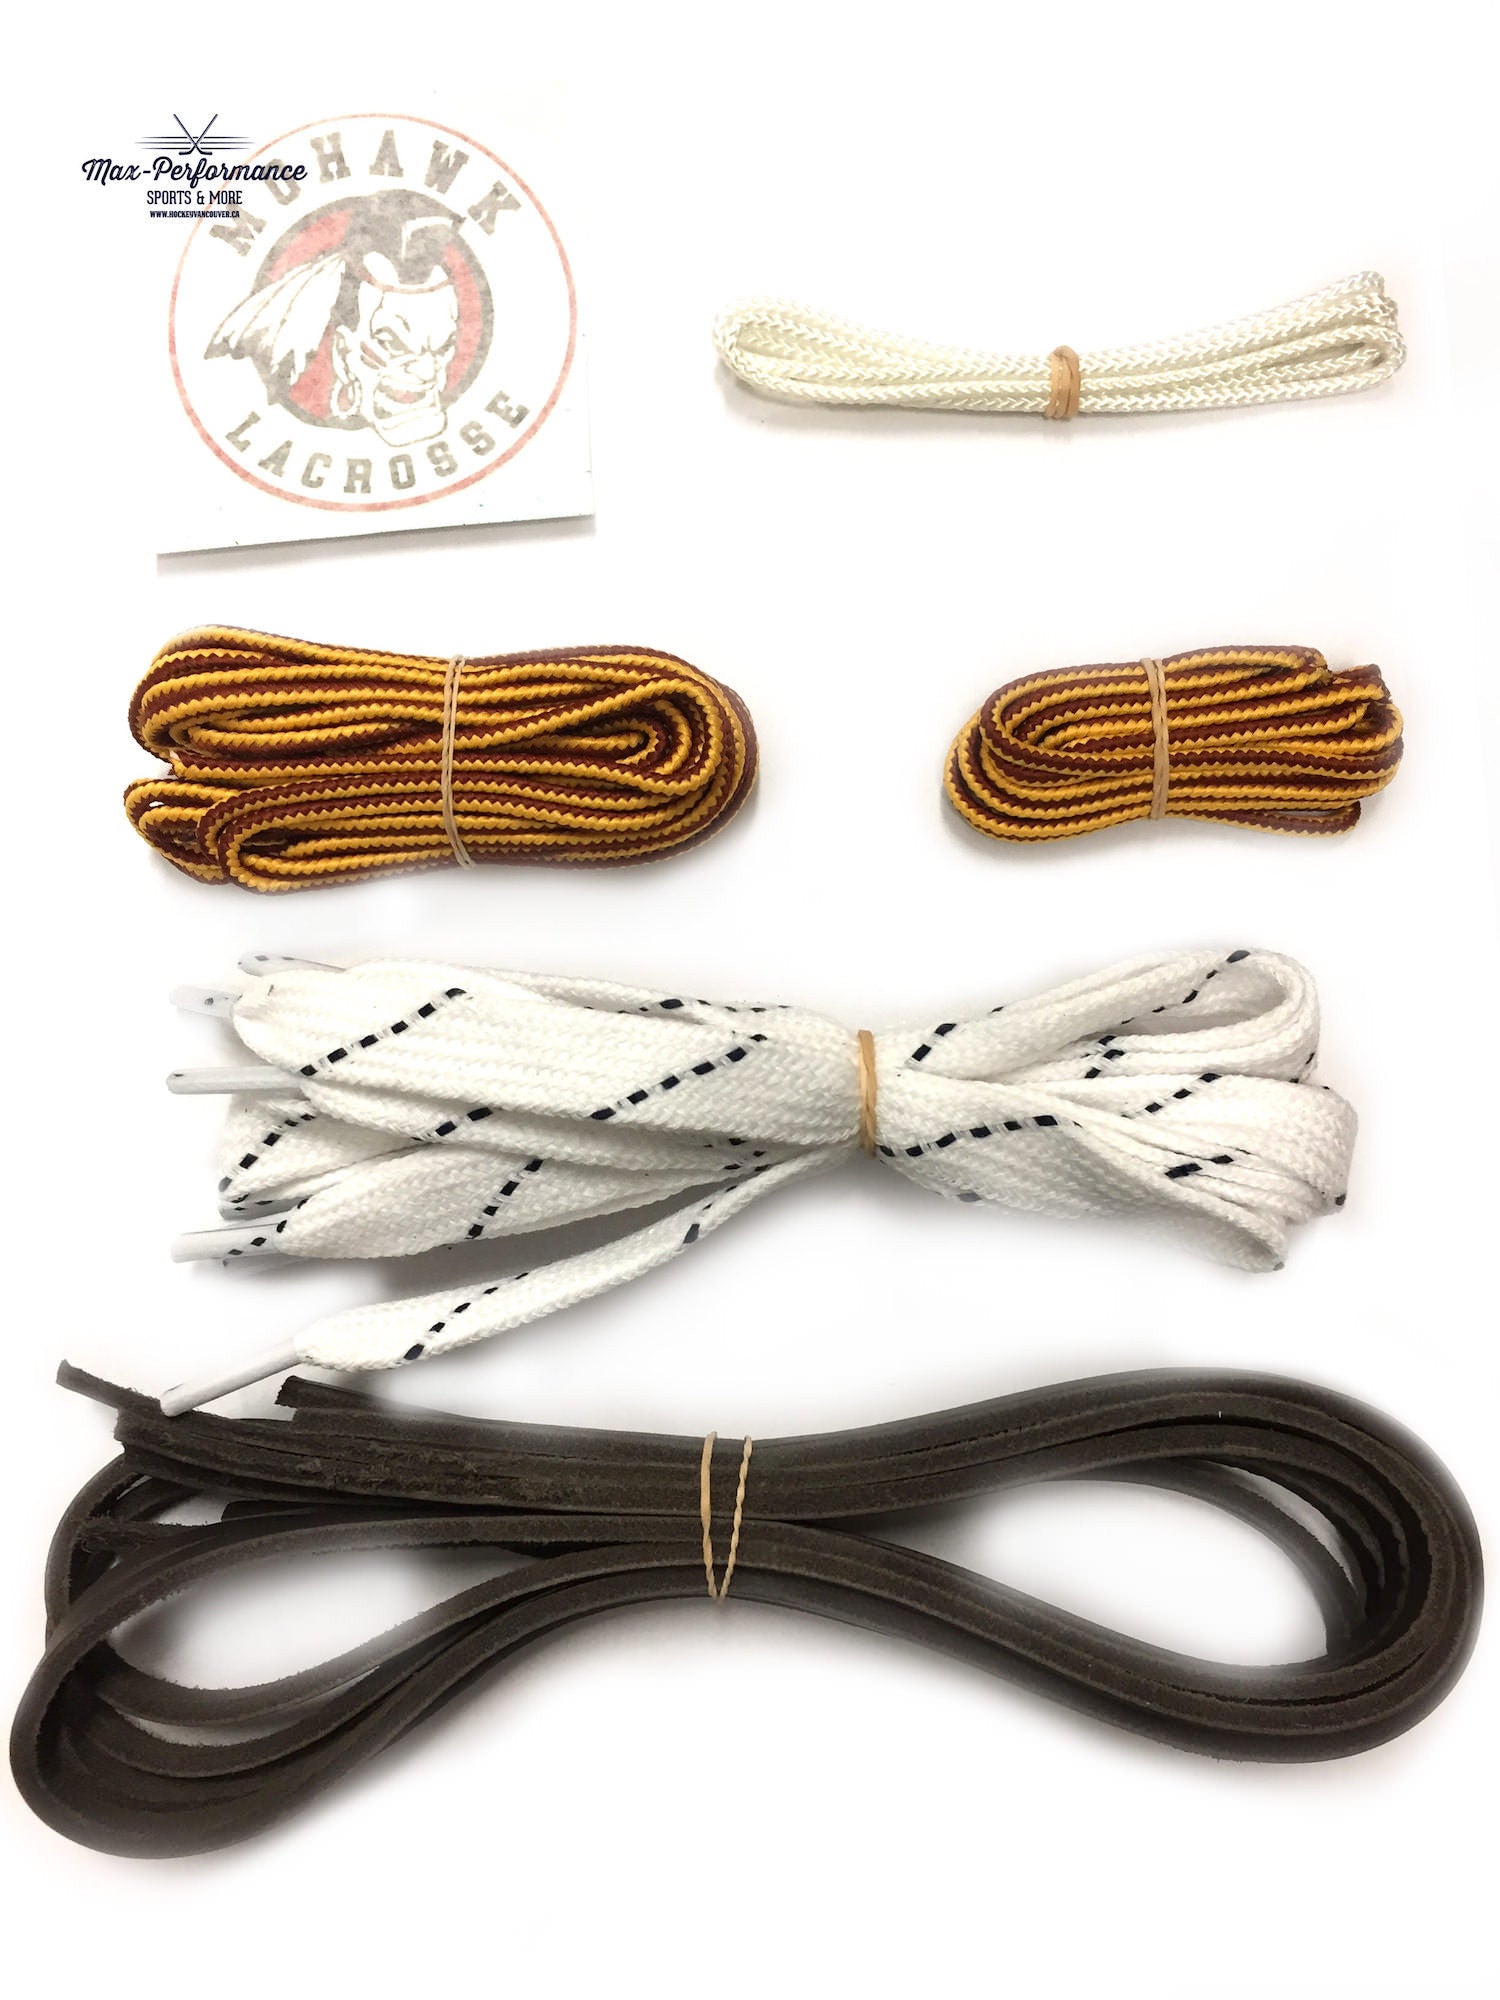 mohawk-lacrosse-traditional-stringing-kit-for-wood-lacrosse-sticks